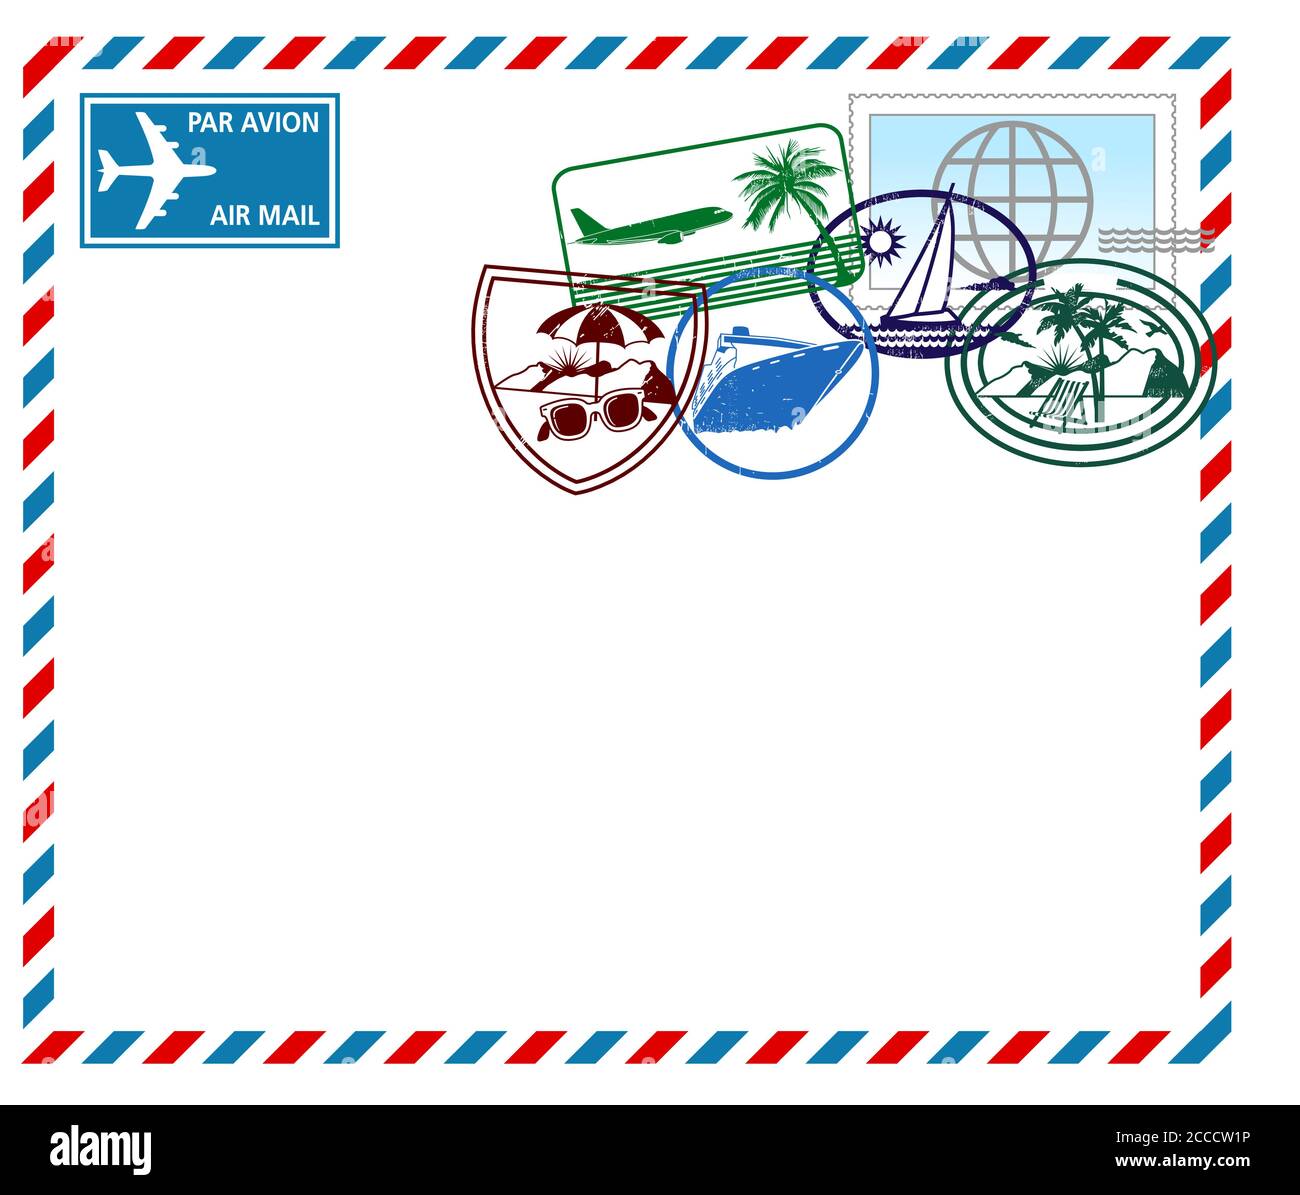 Luftpost-Umschlag mit Poststempel - Vektorgrafik Stock Vektor